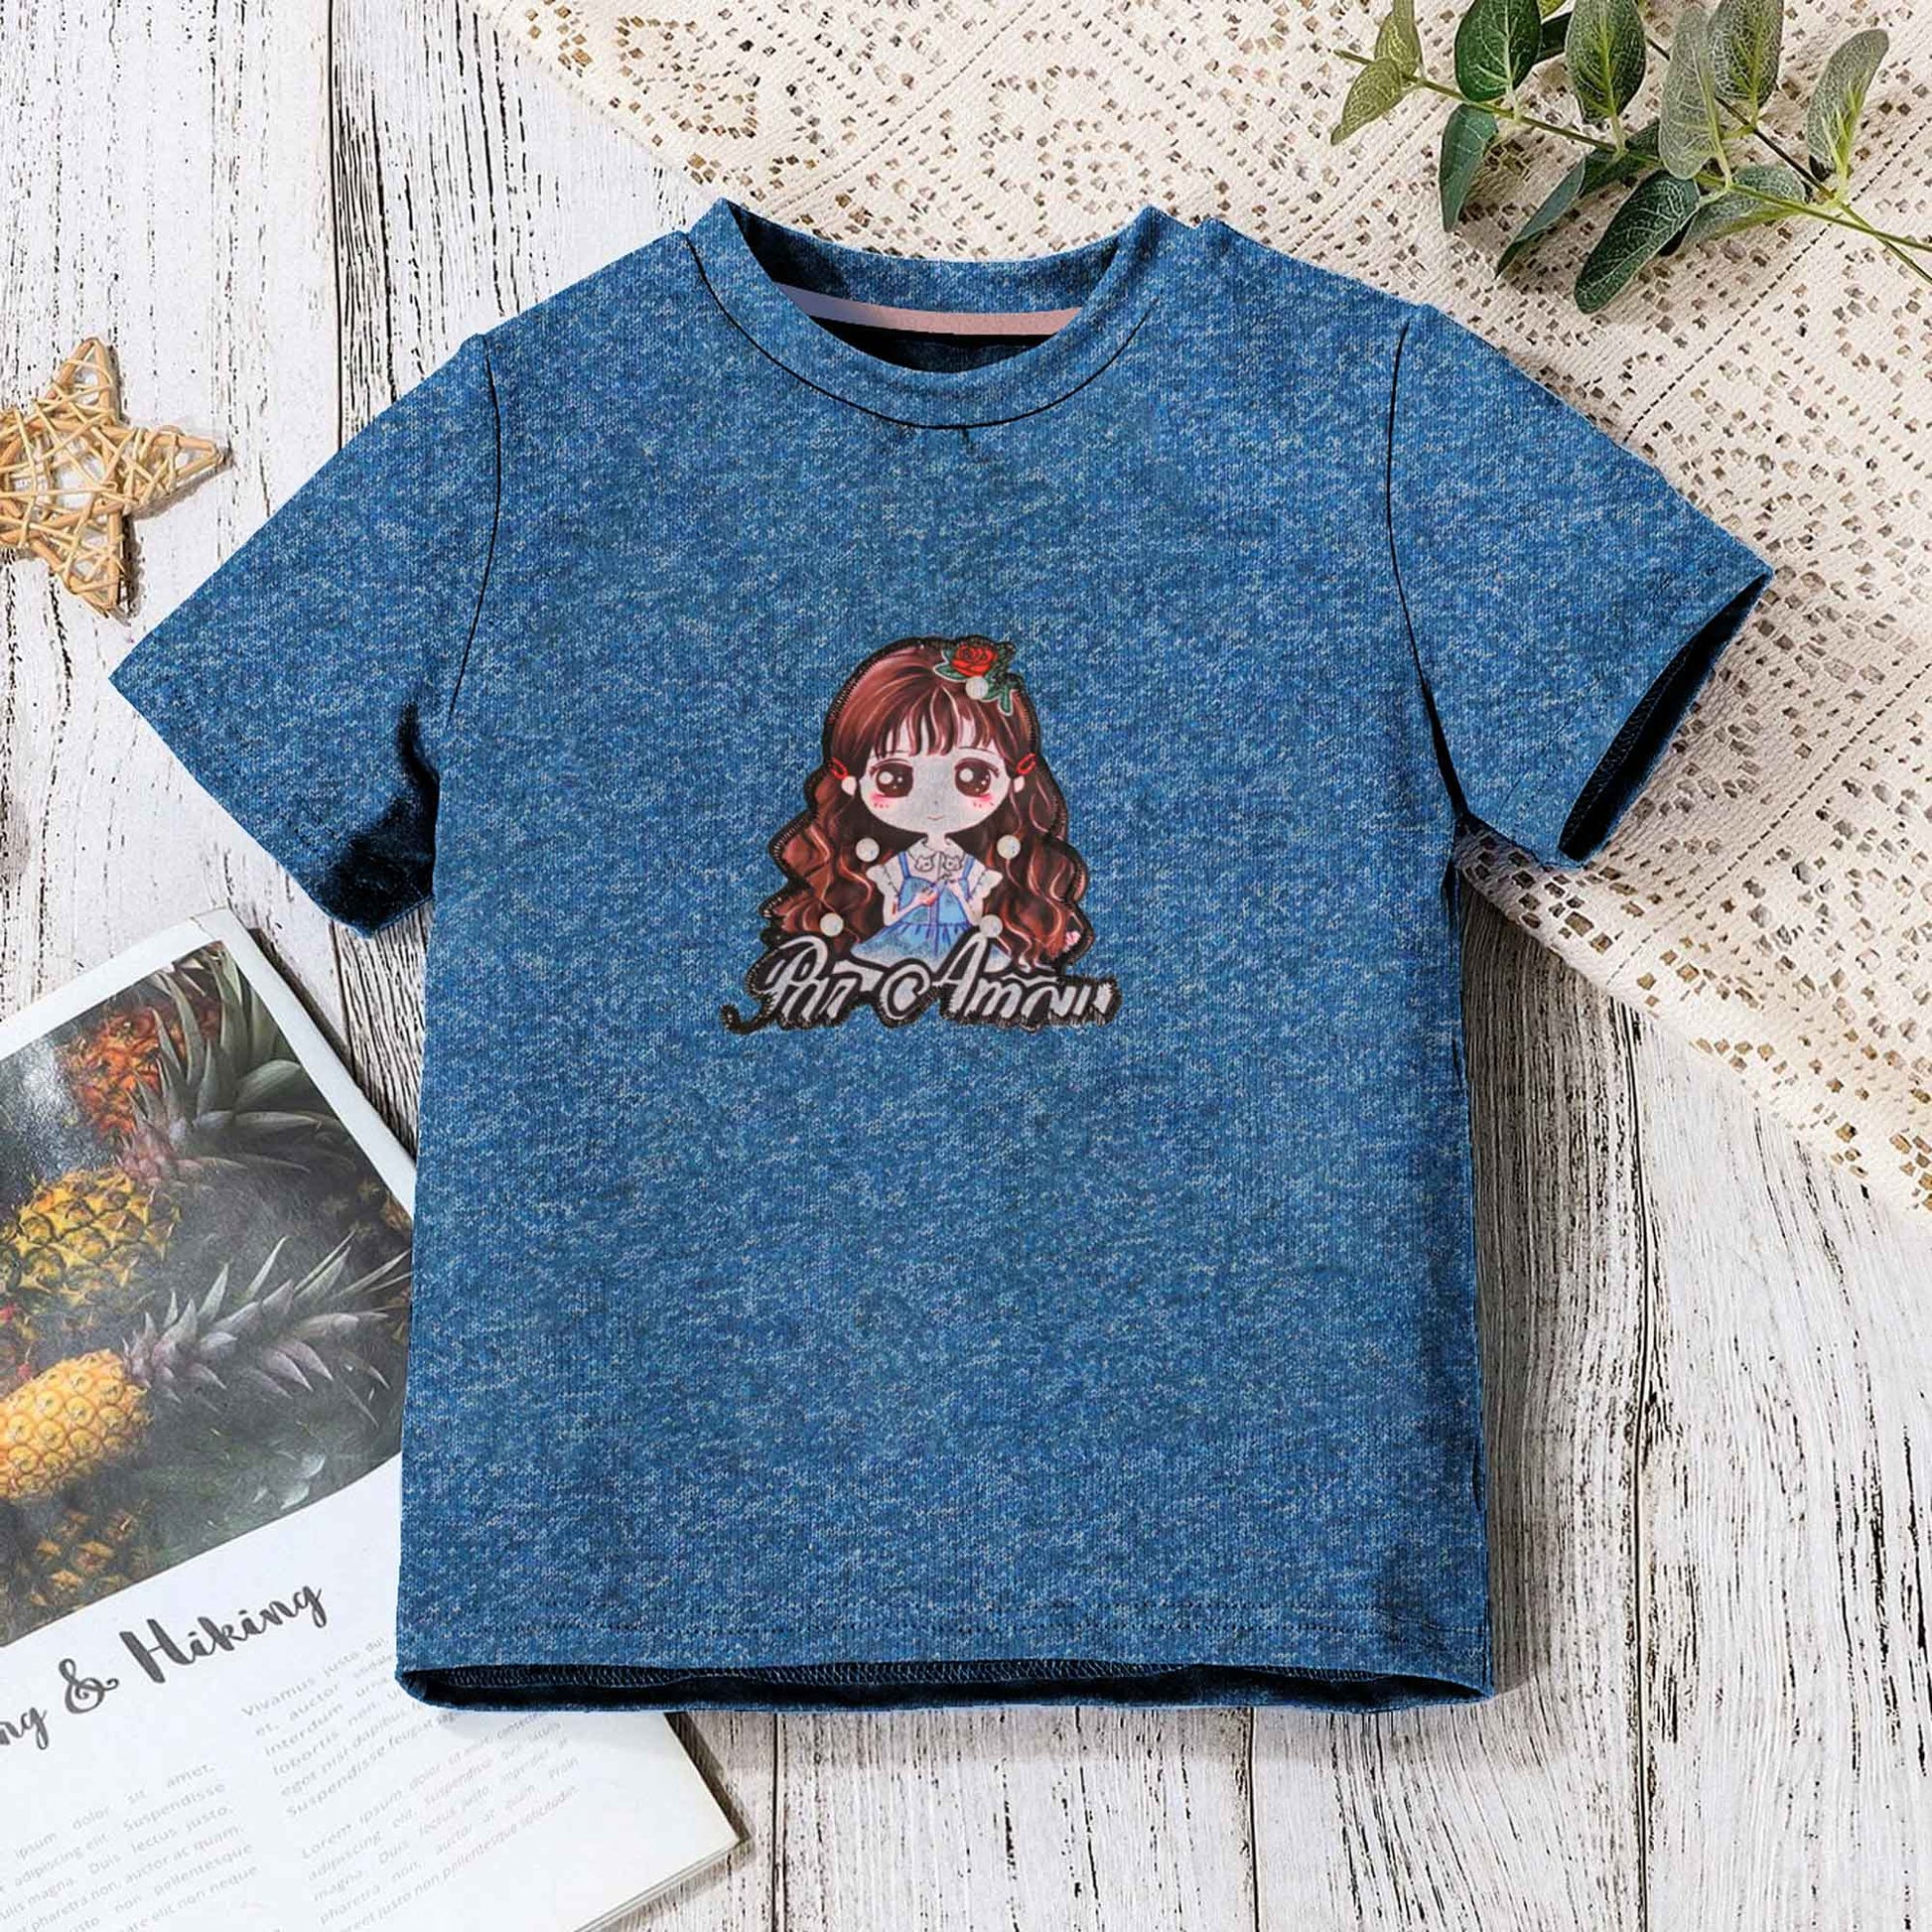 Junior Kid's Par Amau Pearl Embellished Tee Shirt Girl's Tee Shirt SZK Navy Marl 3-6 Months 